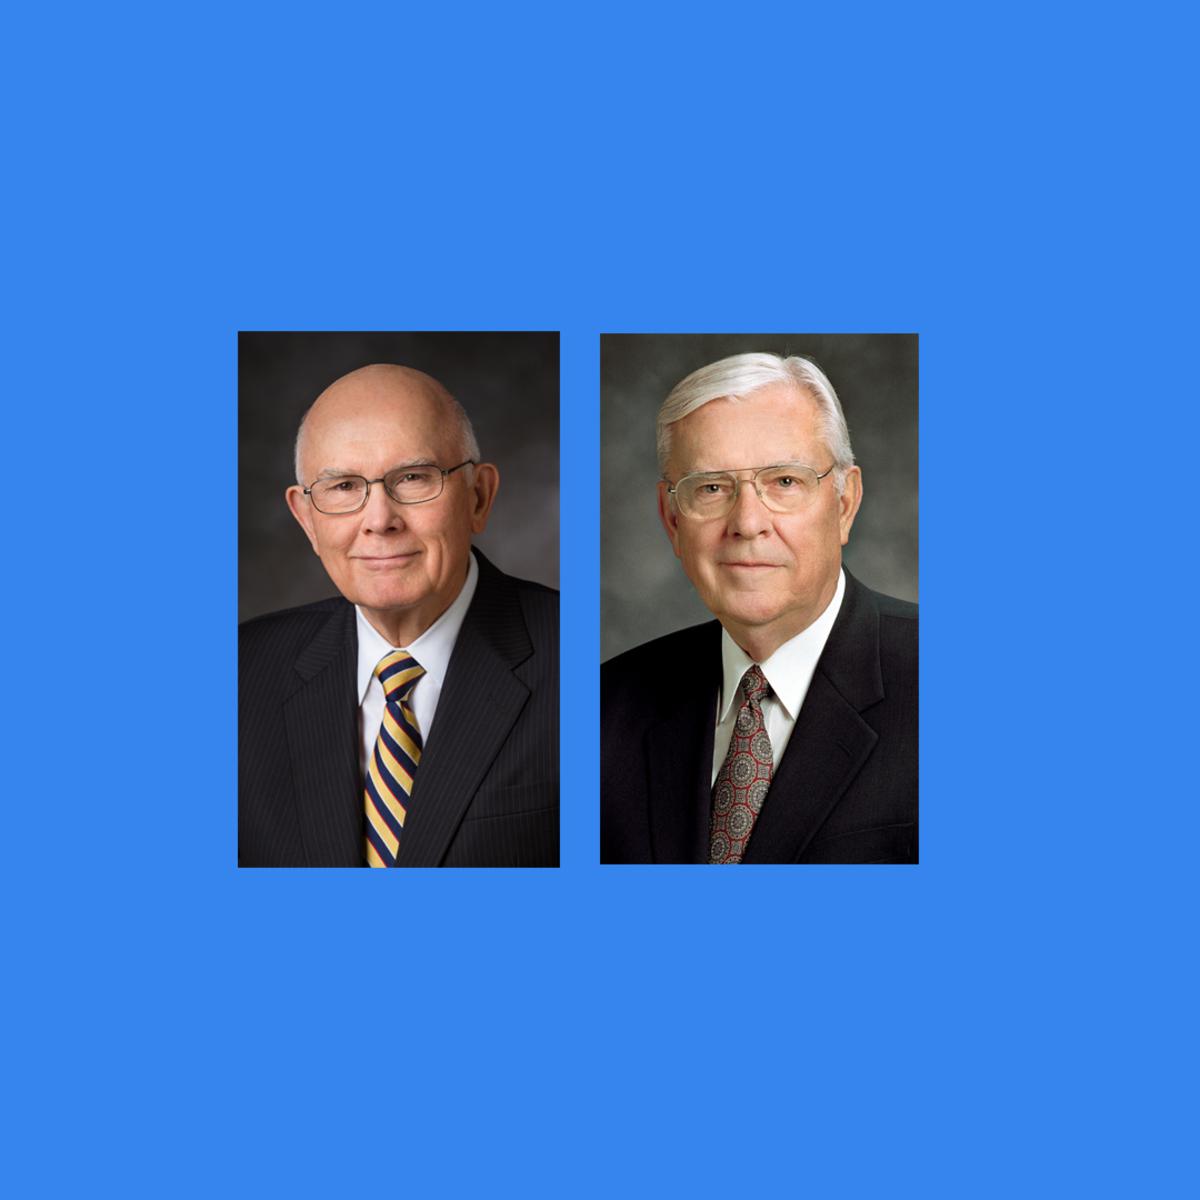 Elder Dallin H. Oaks and Elder M. Russell Ballard